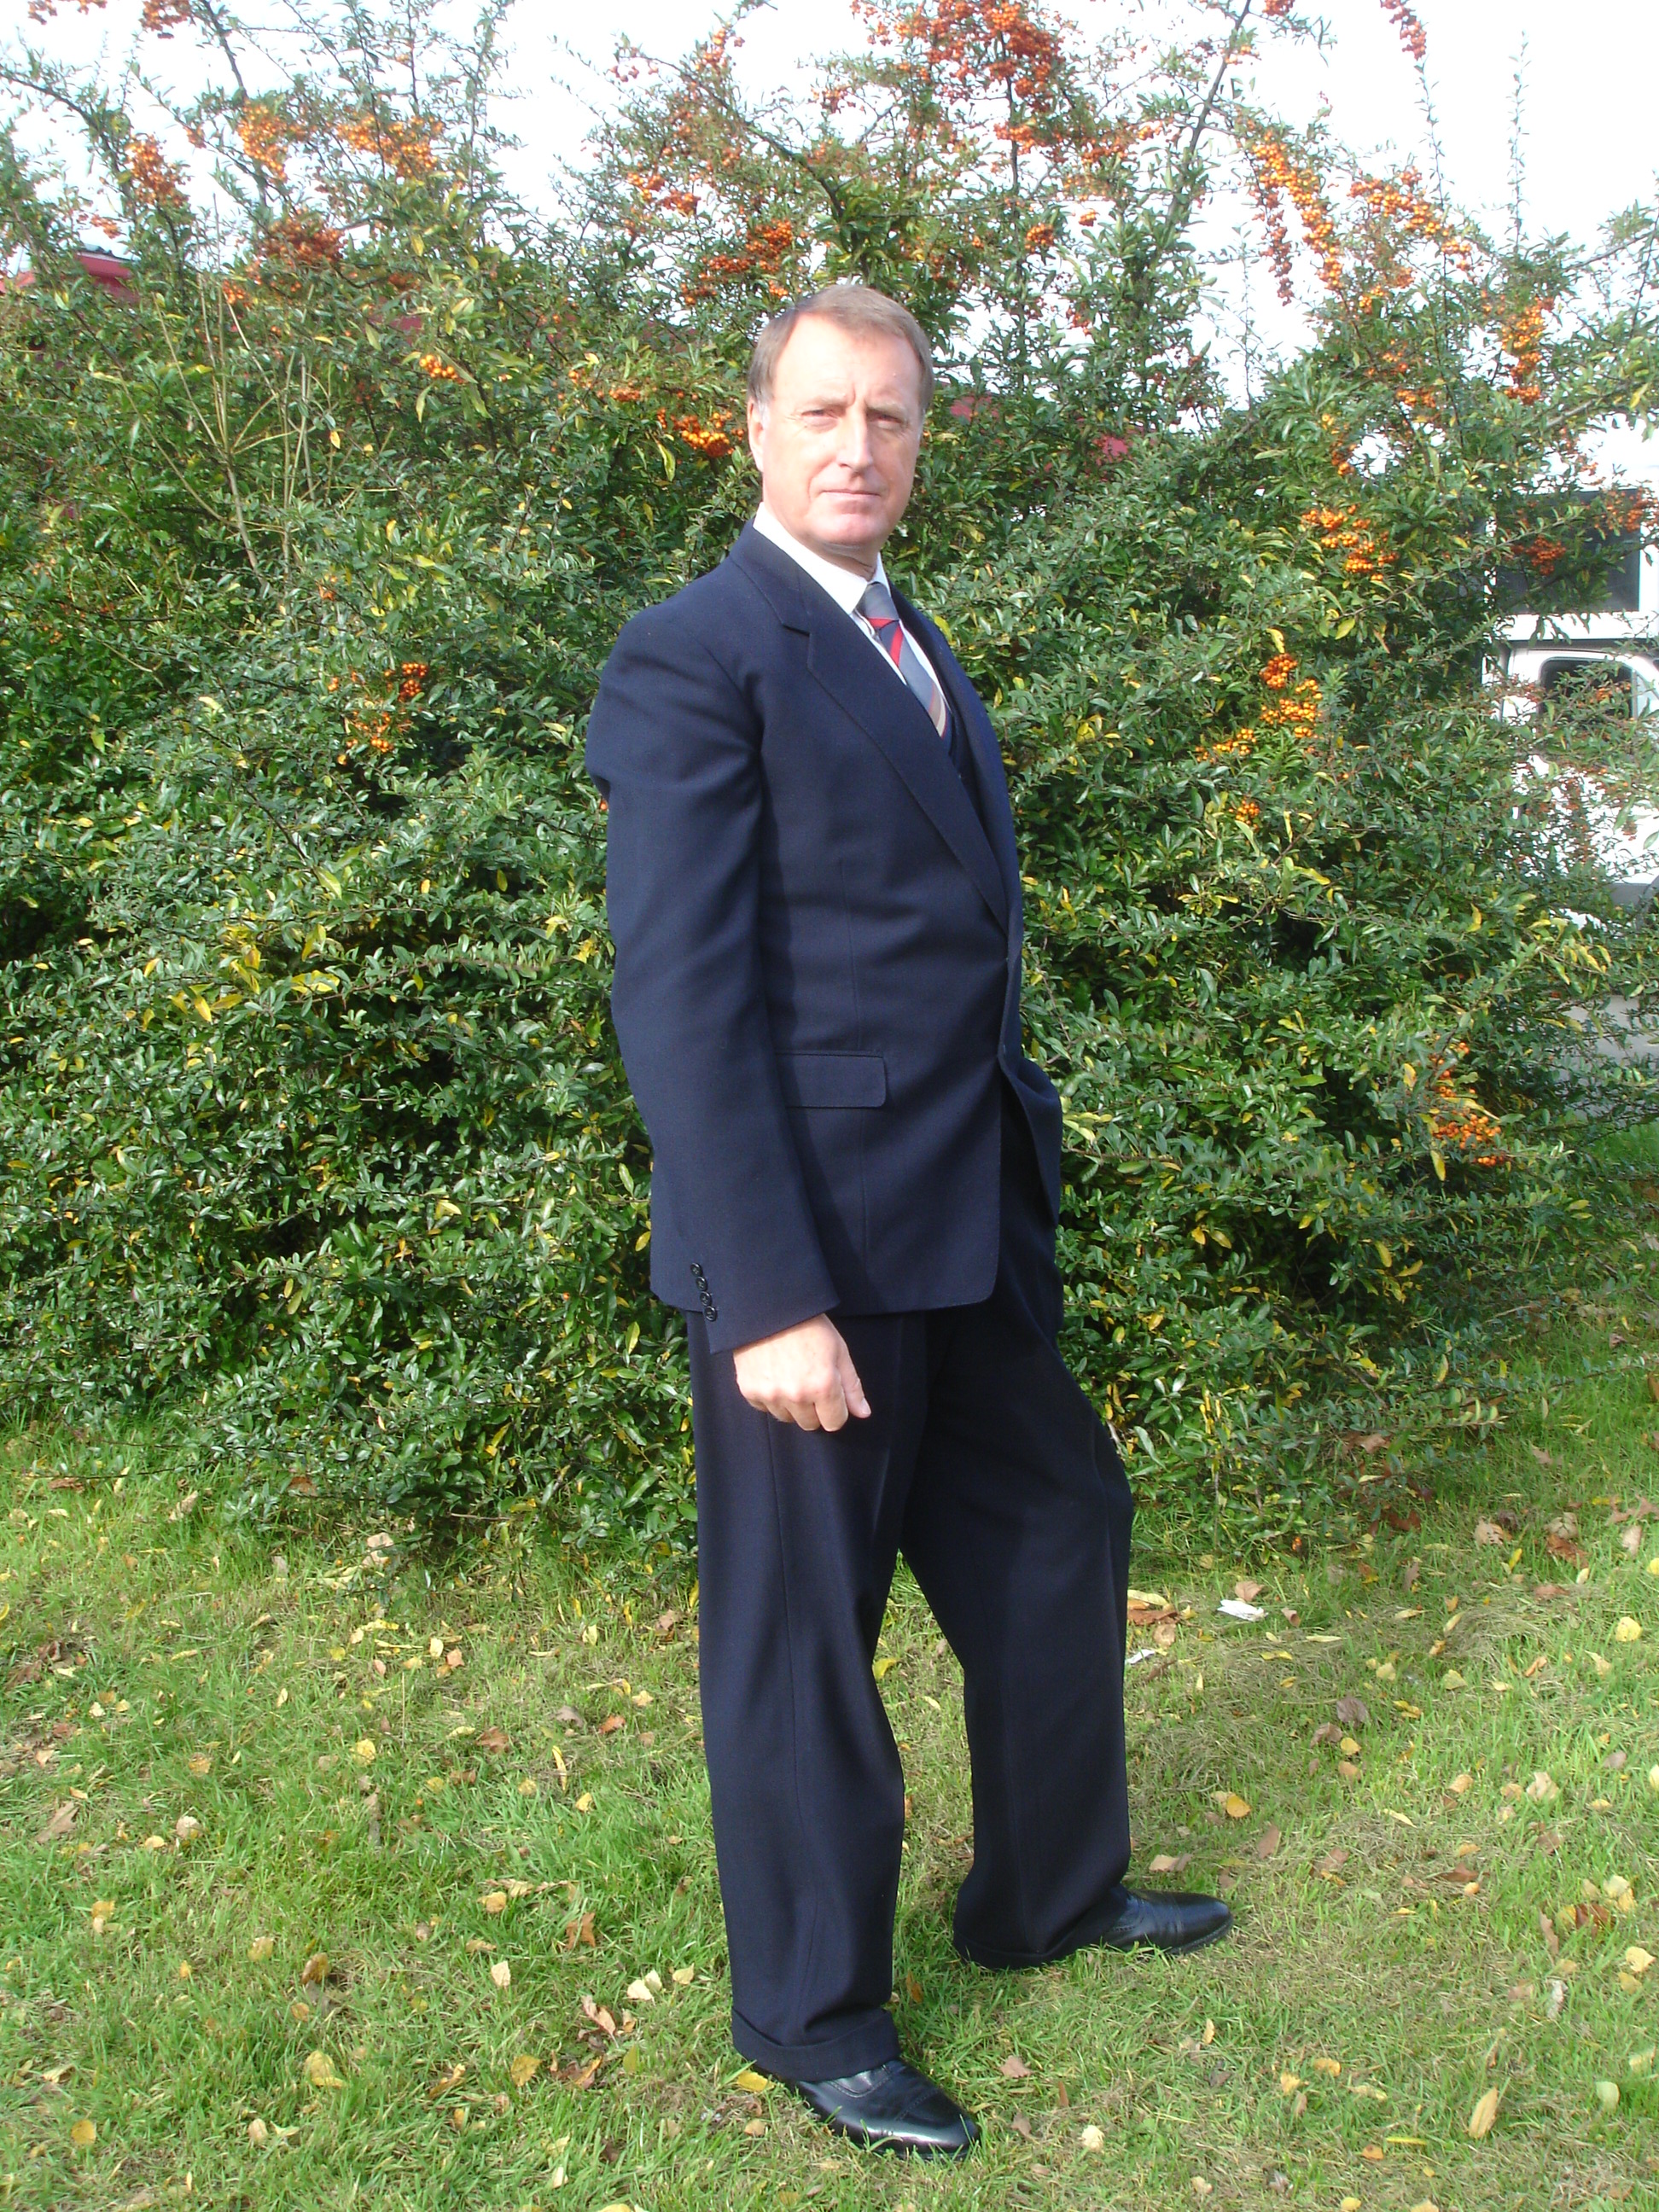 Senior Intelligence Officer MI6 in Tinker, Tailor, Soldier, Spy Nov 2010